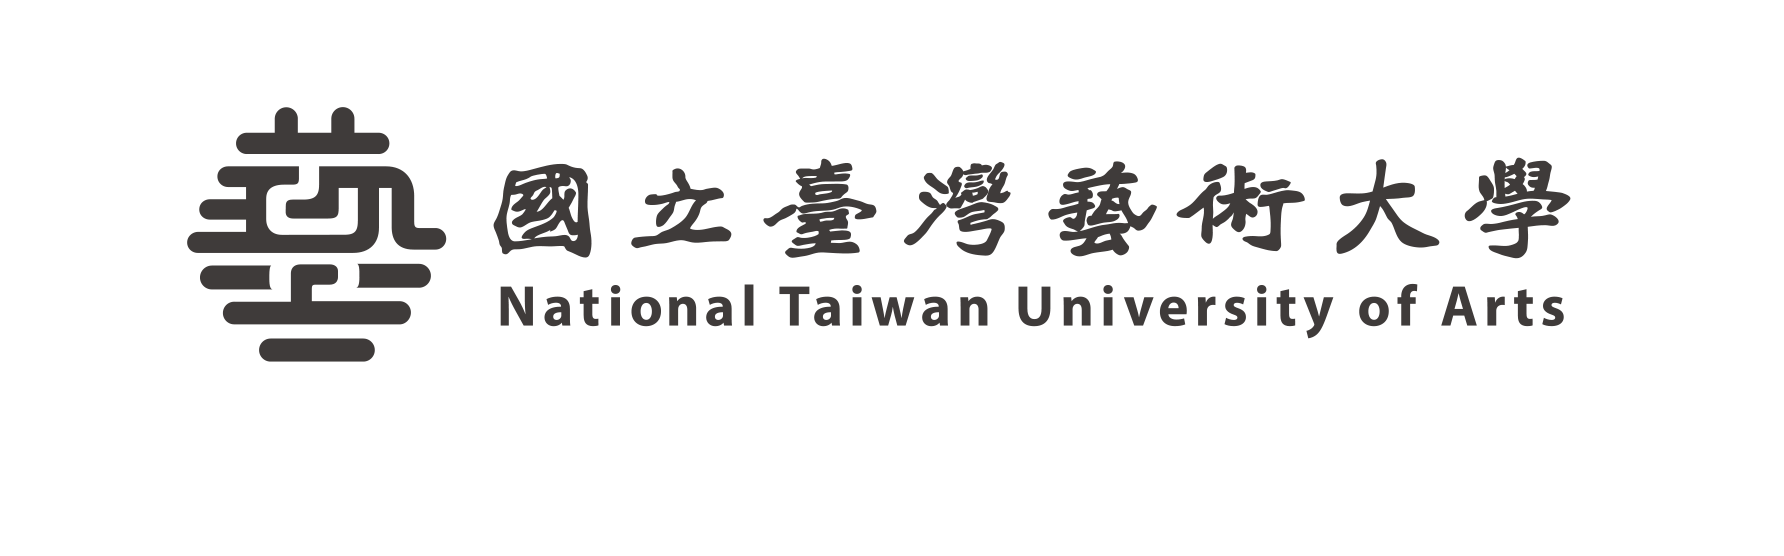 National Taiwan University of Arts